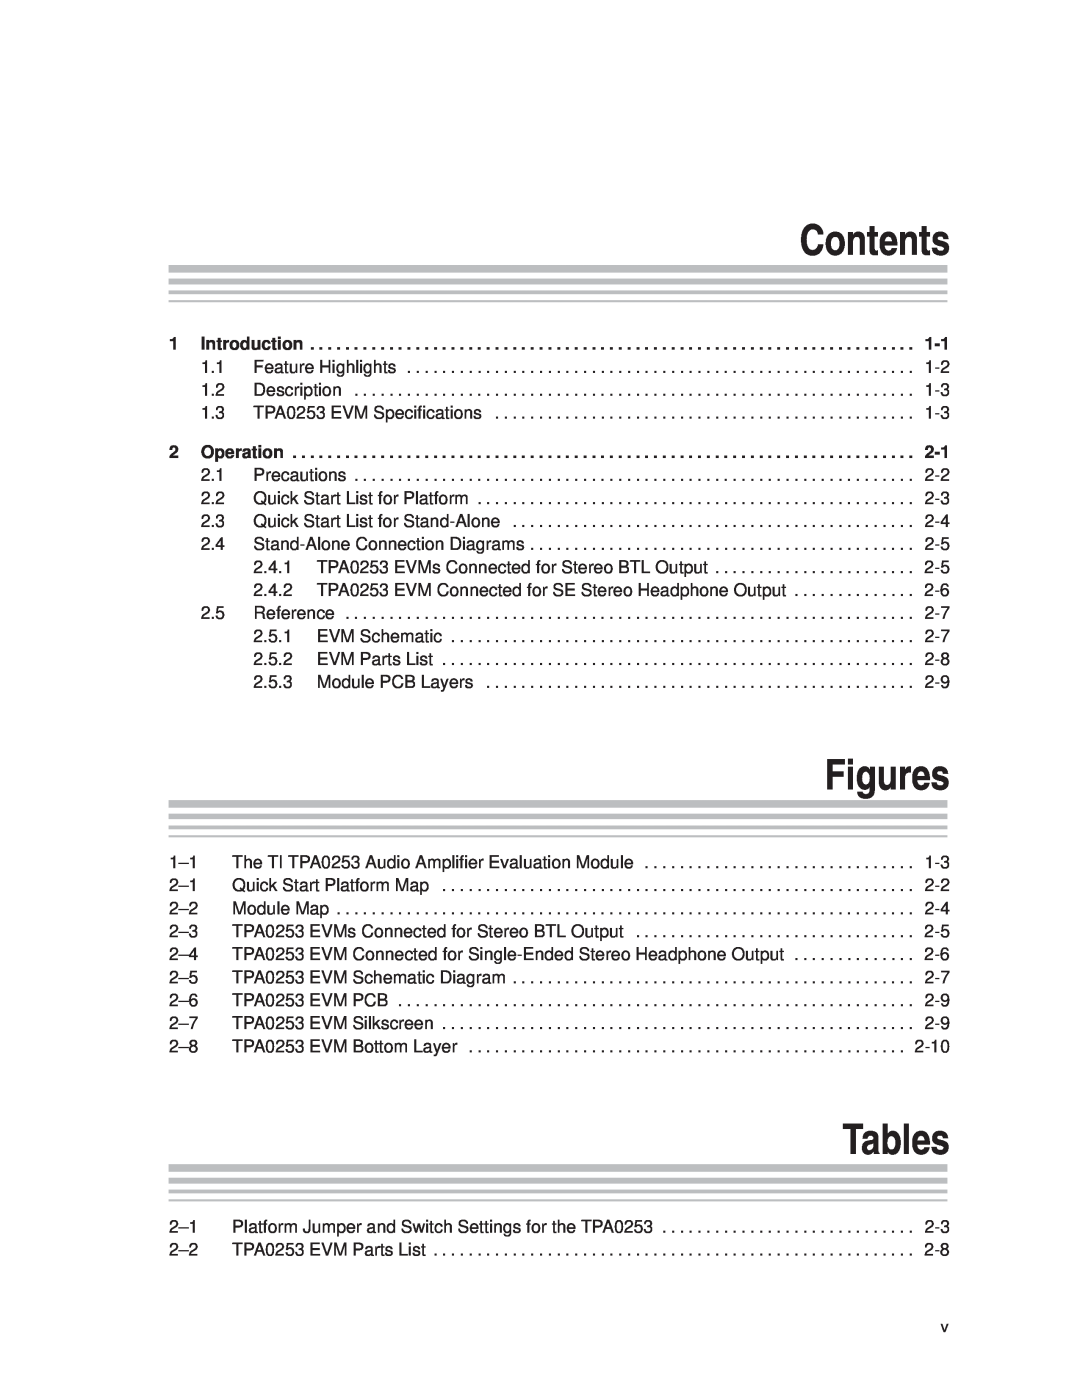 Texas Instruments TPA0253 manual Contents, Figures, Tables 